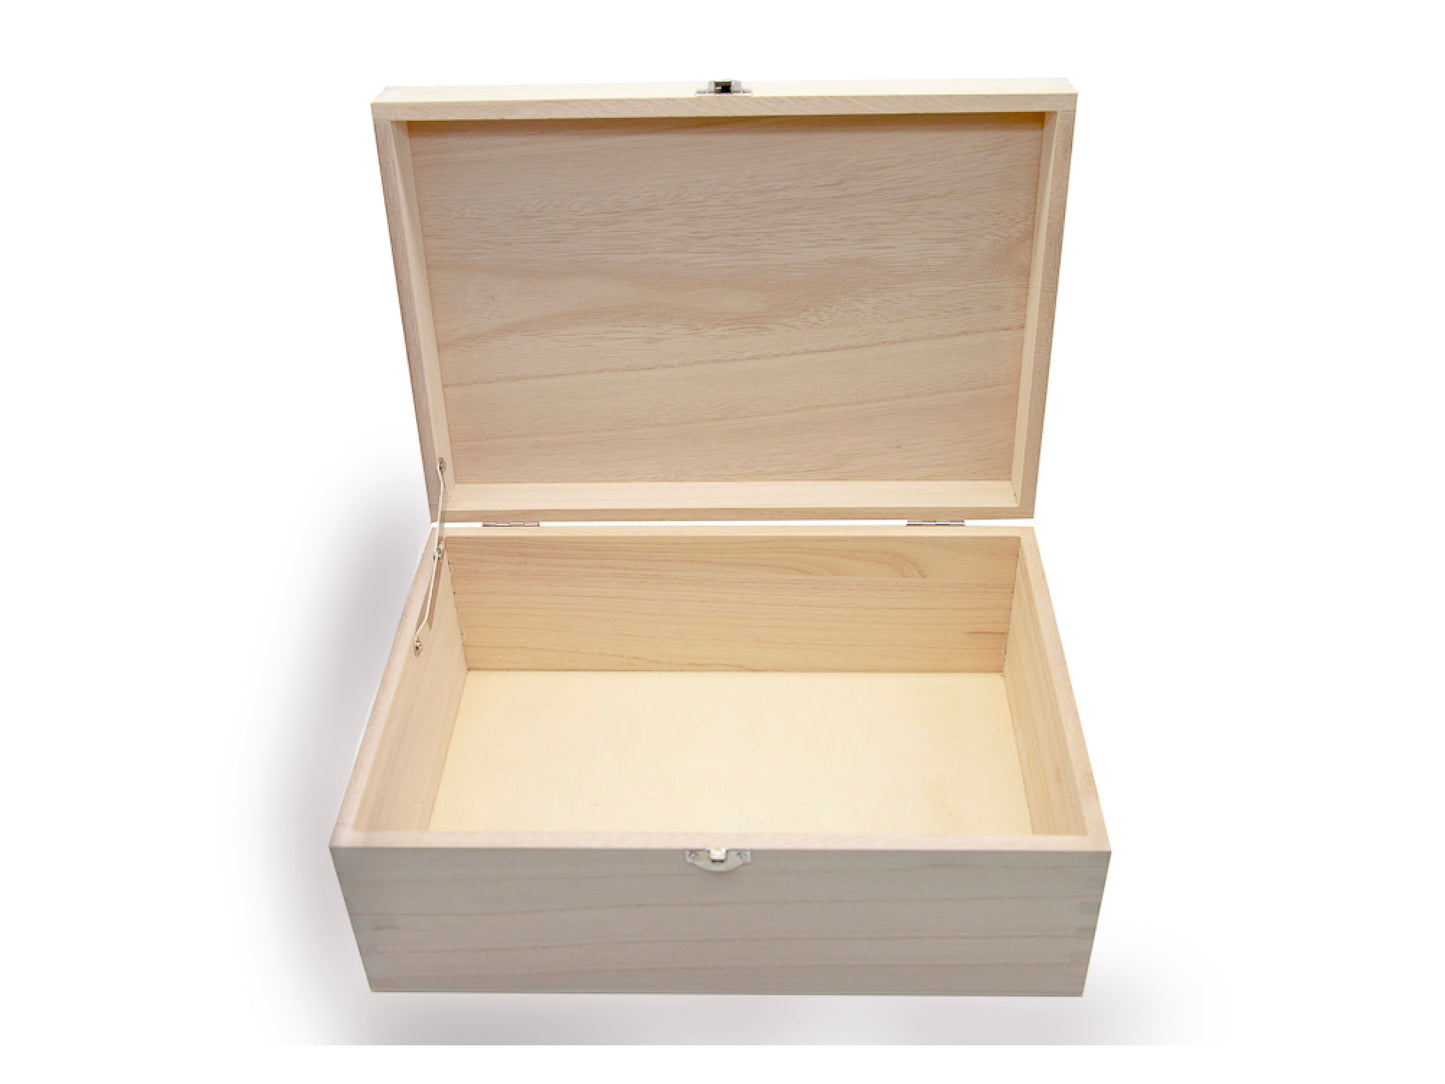 Engraved Wooden Keepsake Box | Mr & Mrs | Happily Ever After